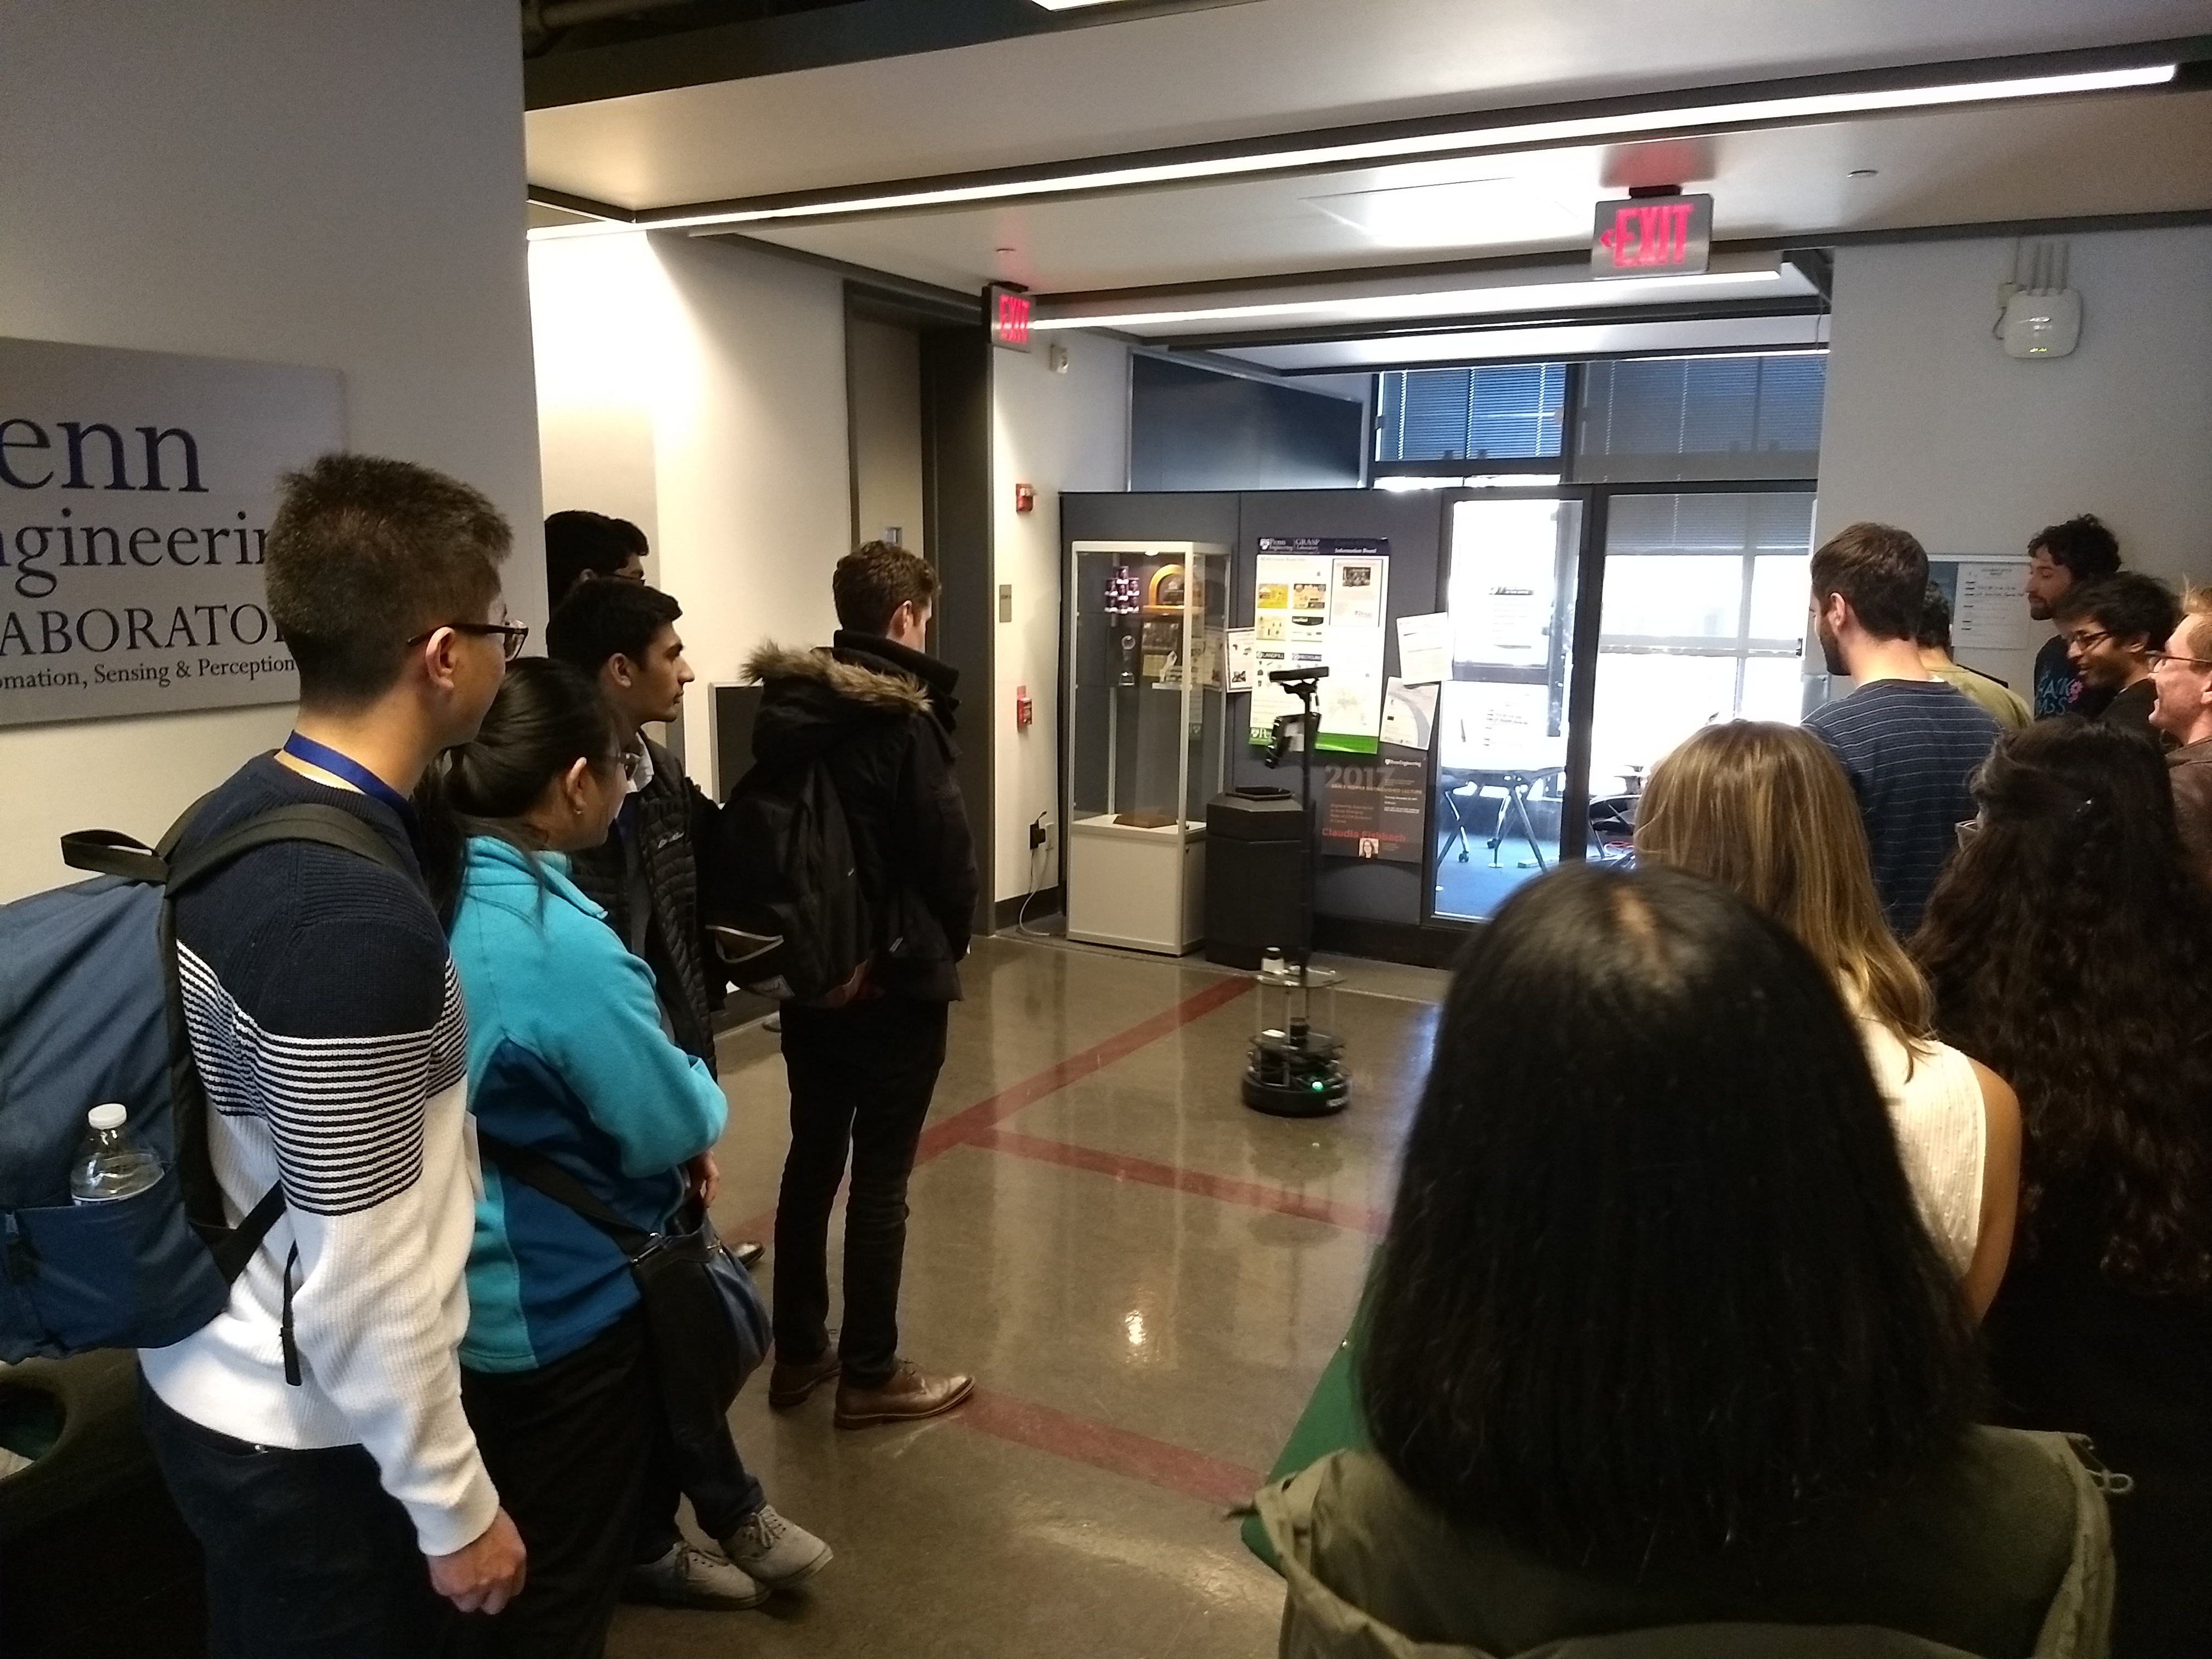 An earlier version of the autonomous service robot giving a tour to prospective PhD students.